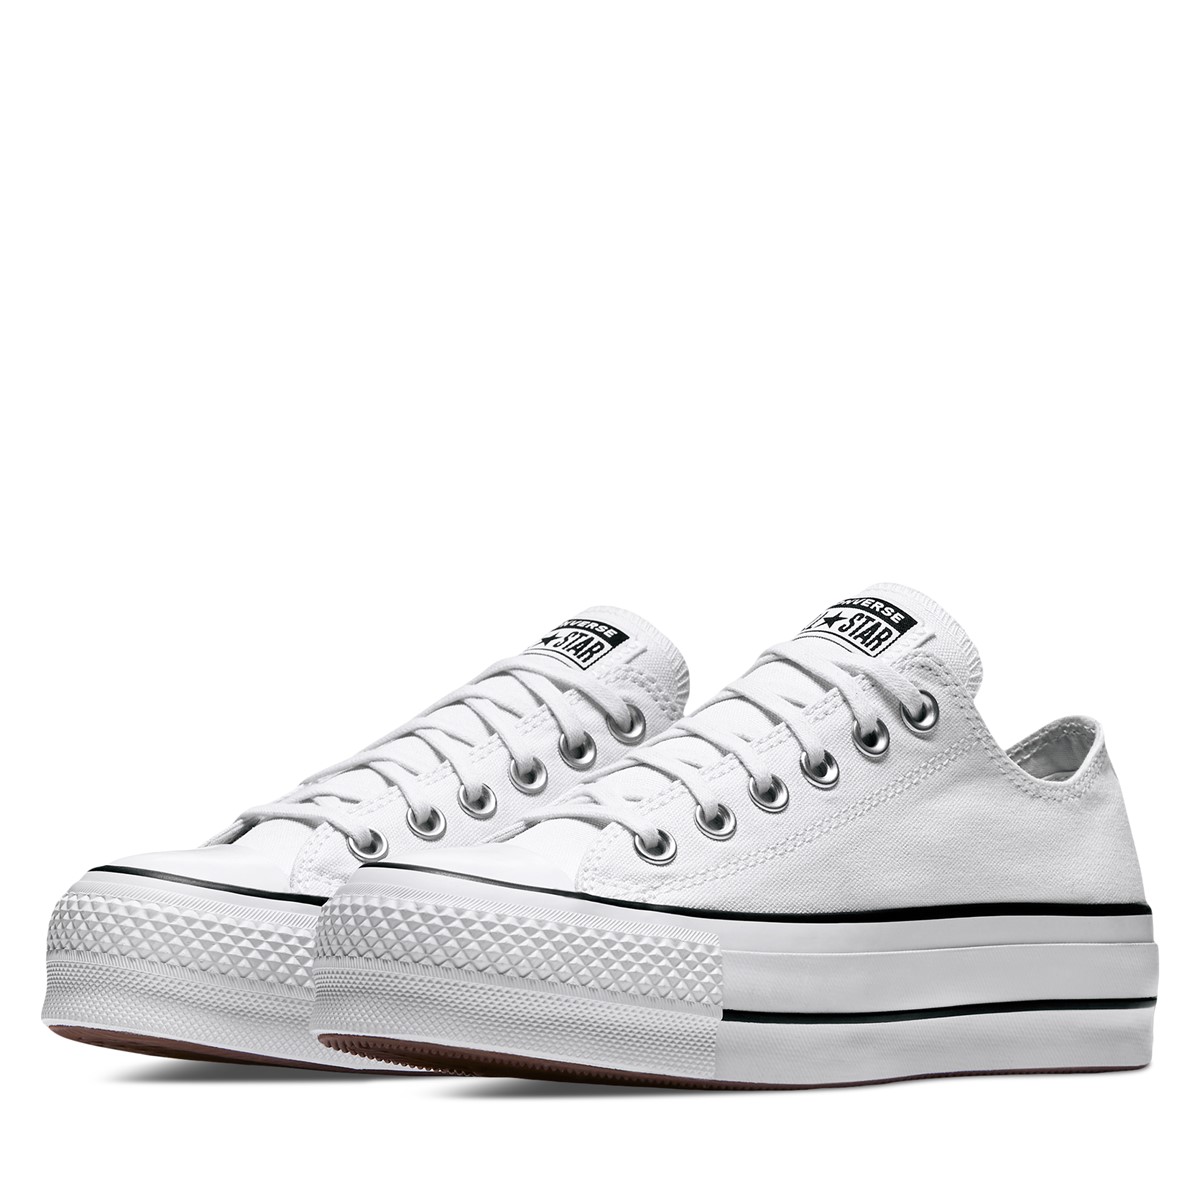 Buy > converse platform sneakers white > in stock